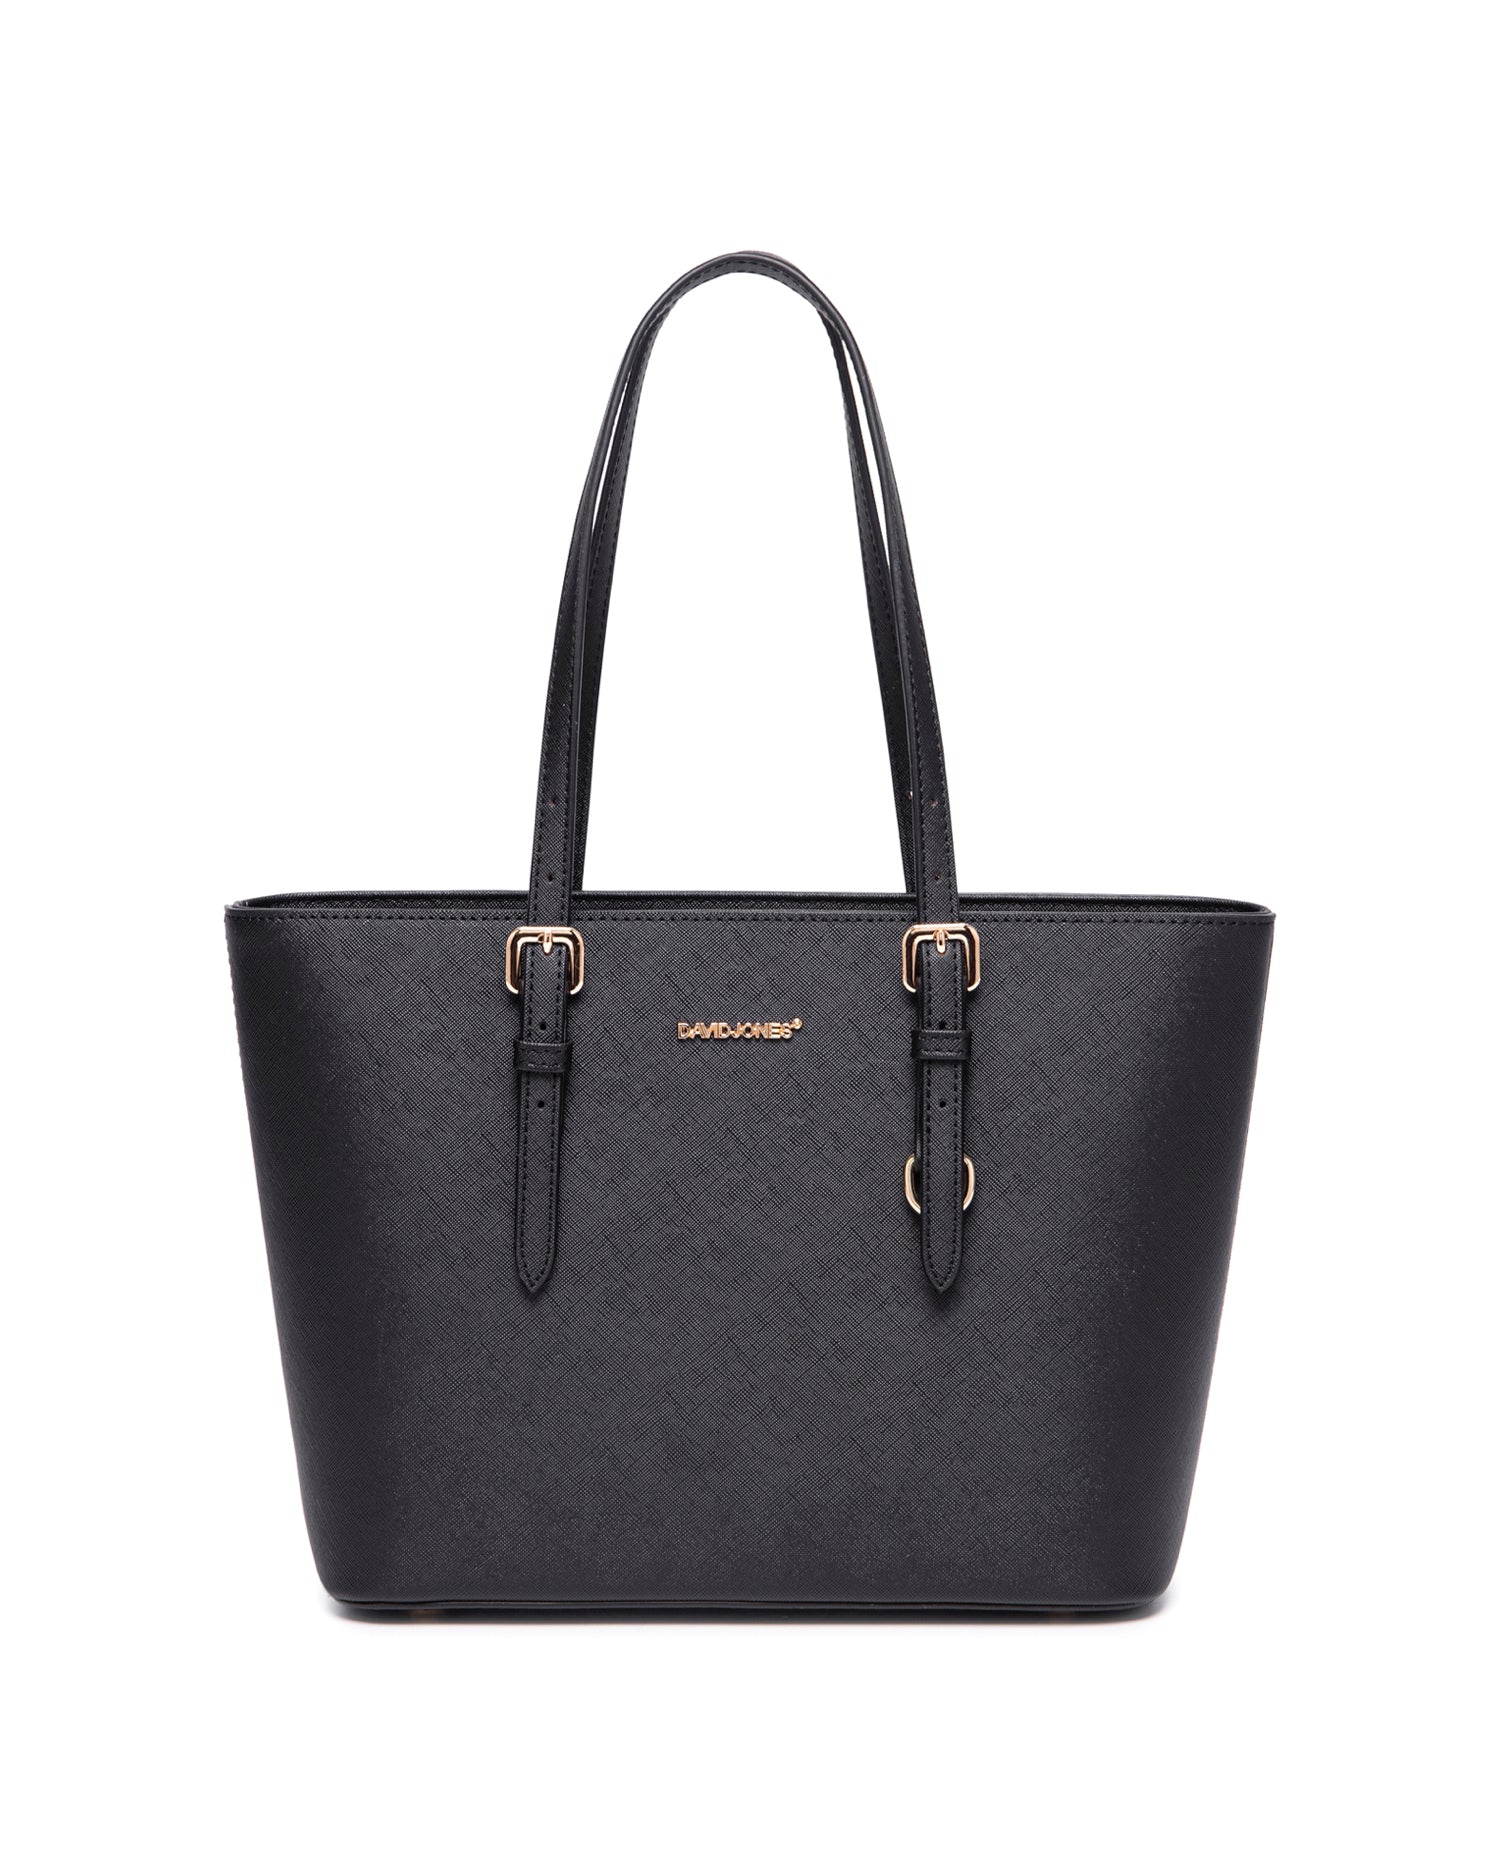 David Jones Women's Handbags | David Jones Handbags Women | David Jones  Women's Bags - Top-handle Bags - Aliexpress